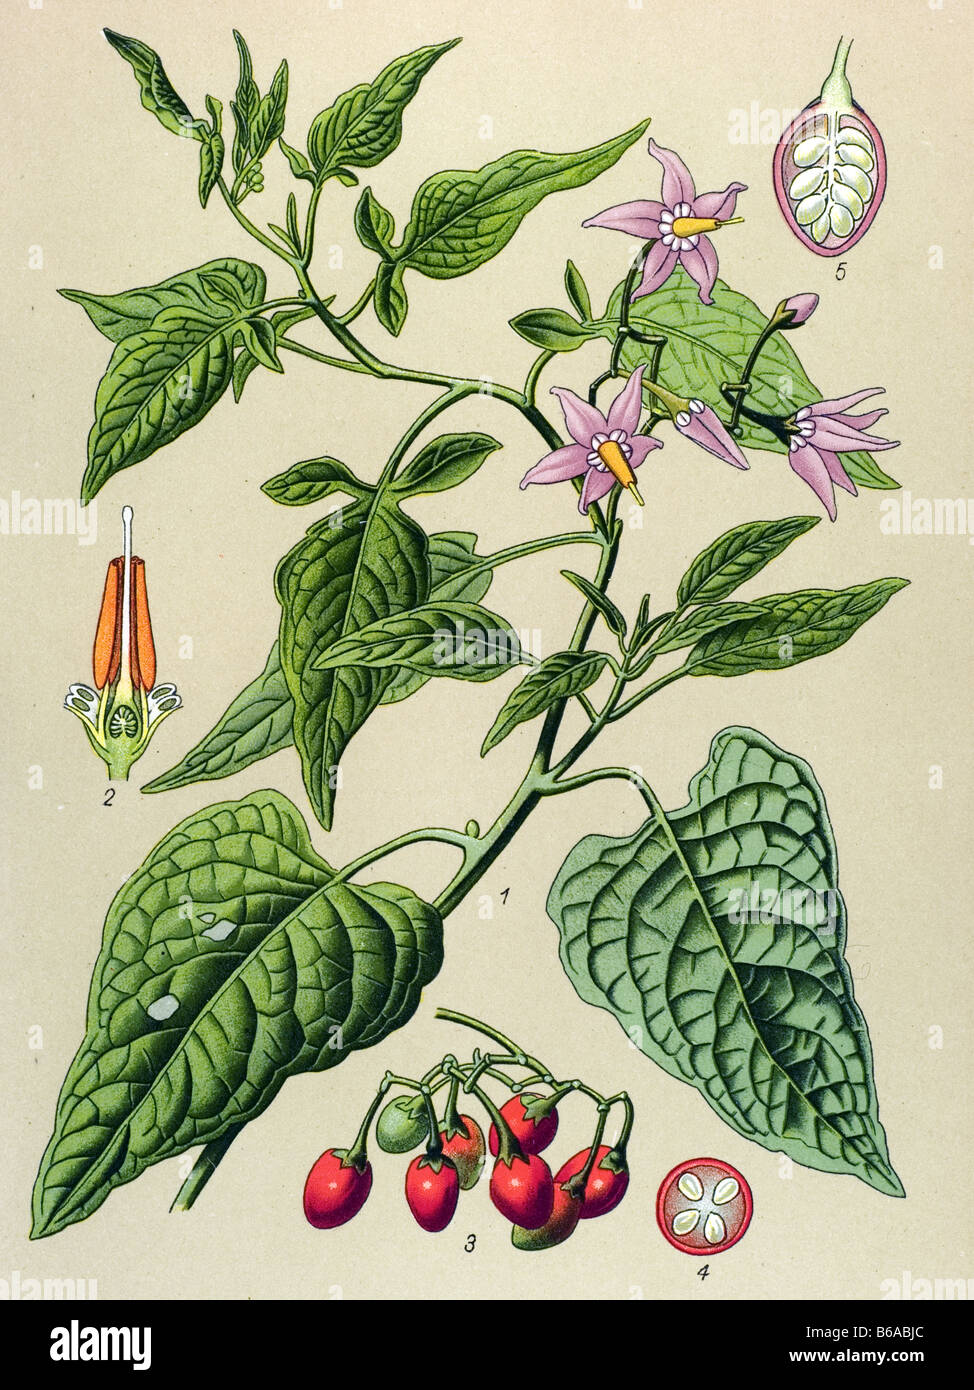 Bittersweet, Solanum dulcamara poisonous plants illustrations Stock Photo